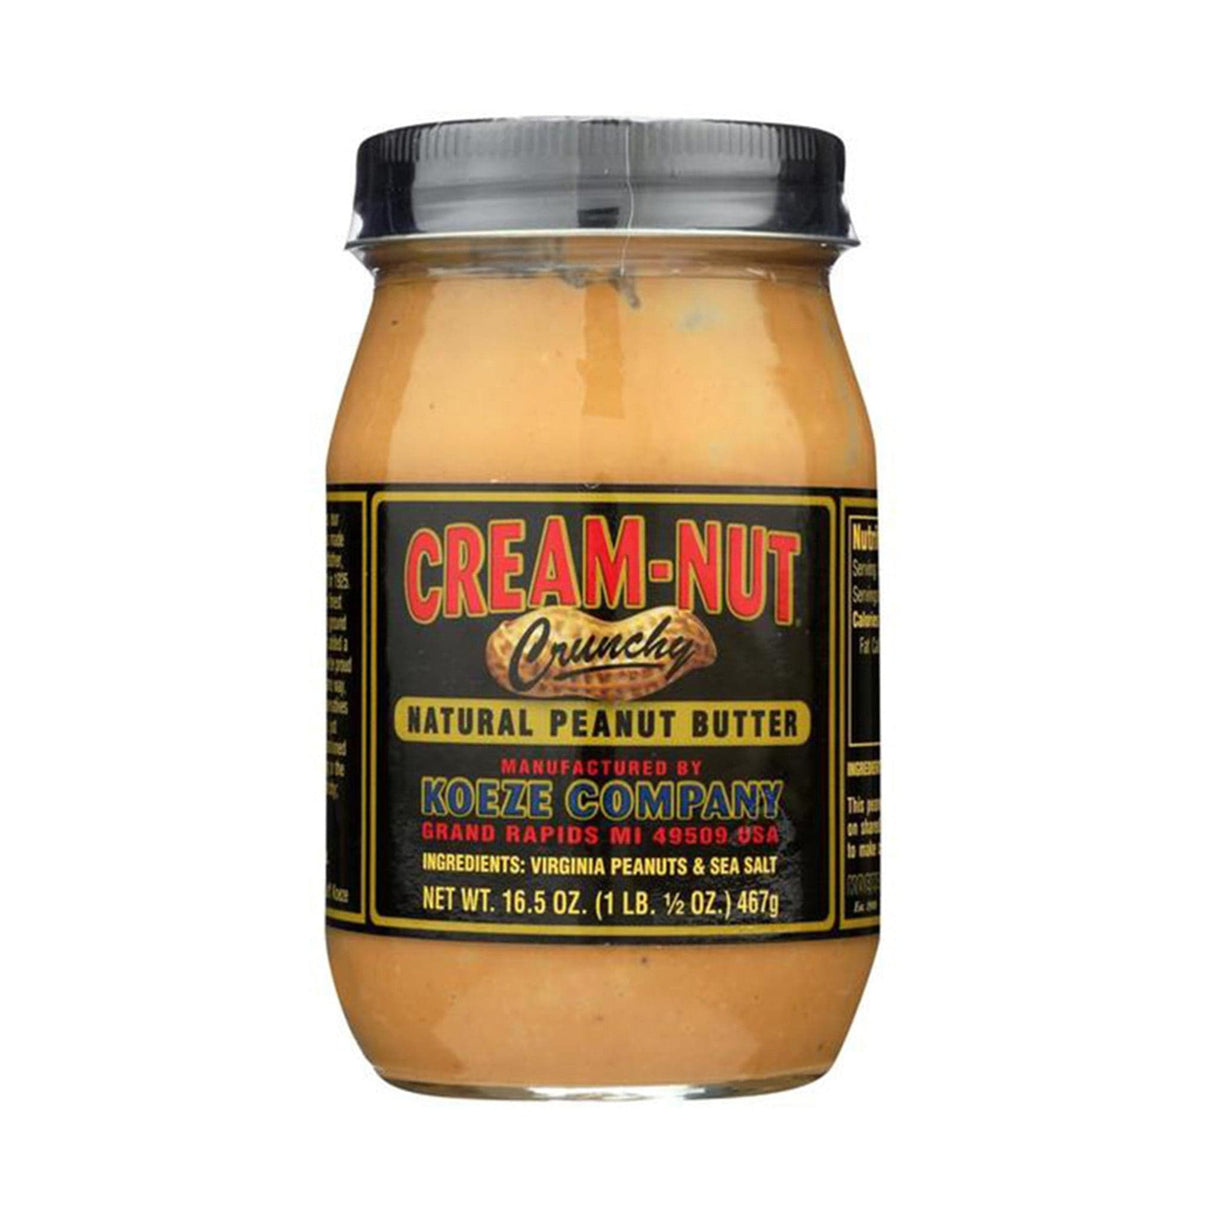 Cream-Nut Crunchy Natural Peanut Butter